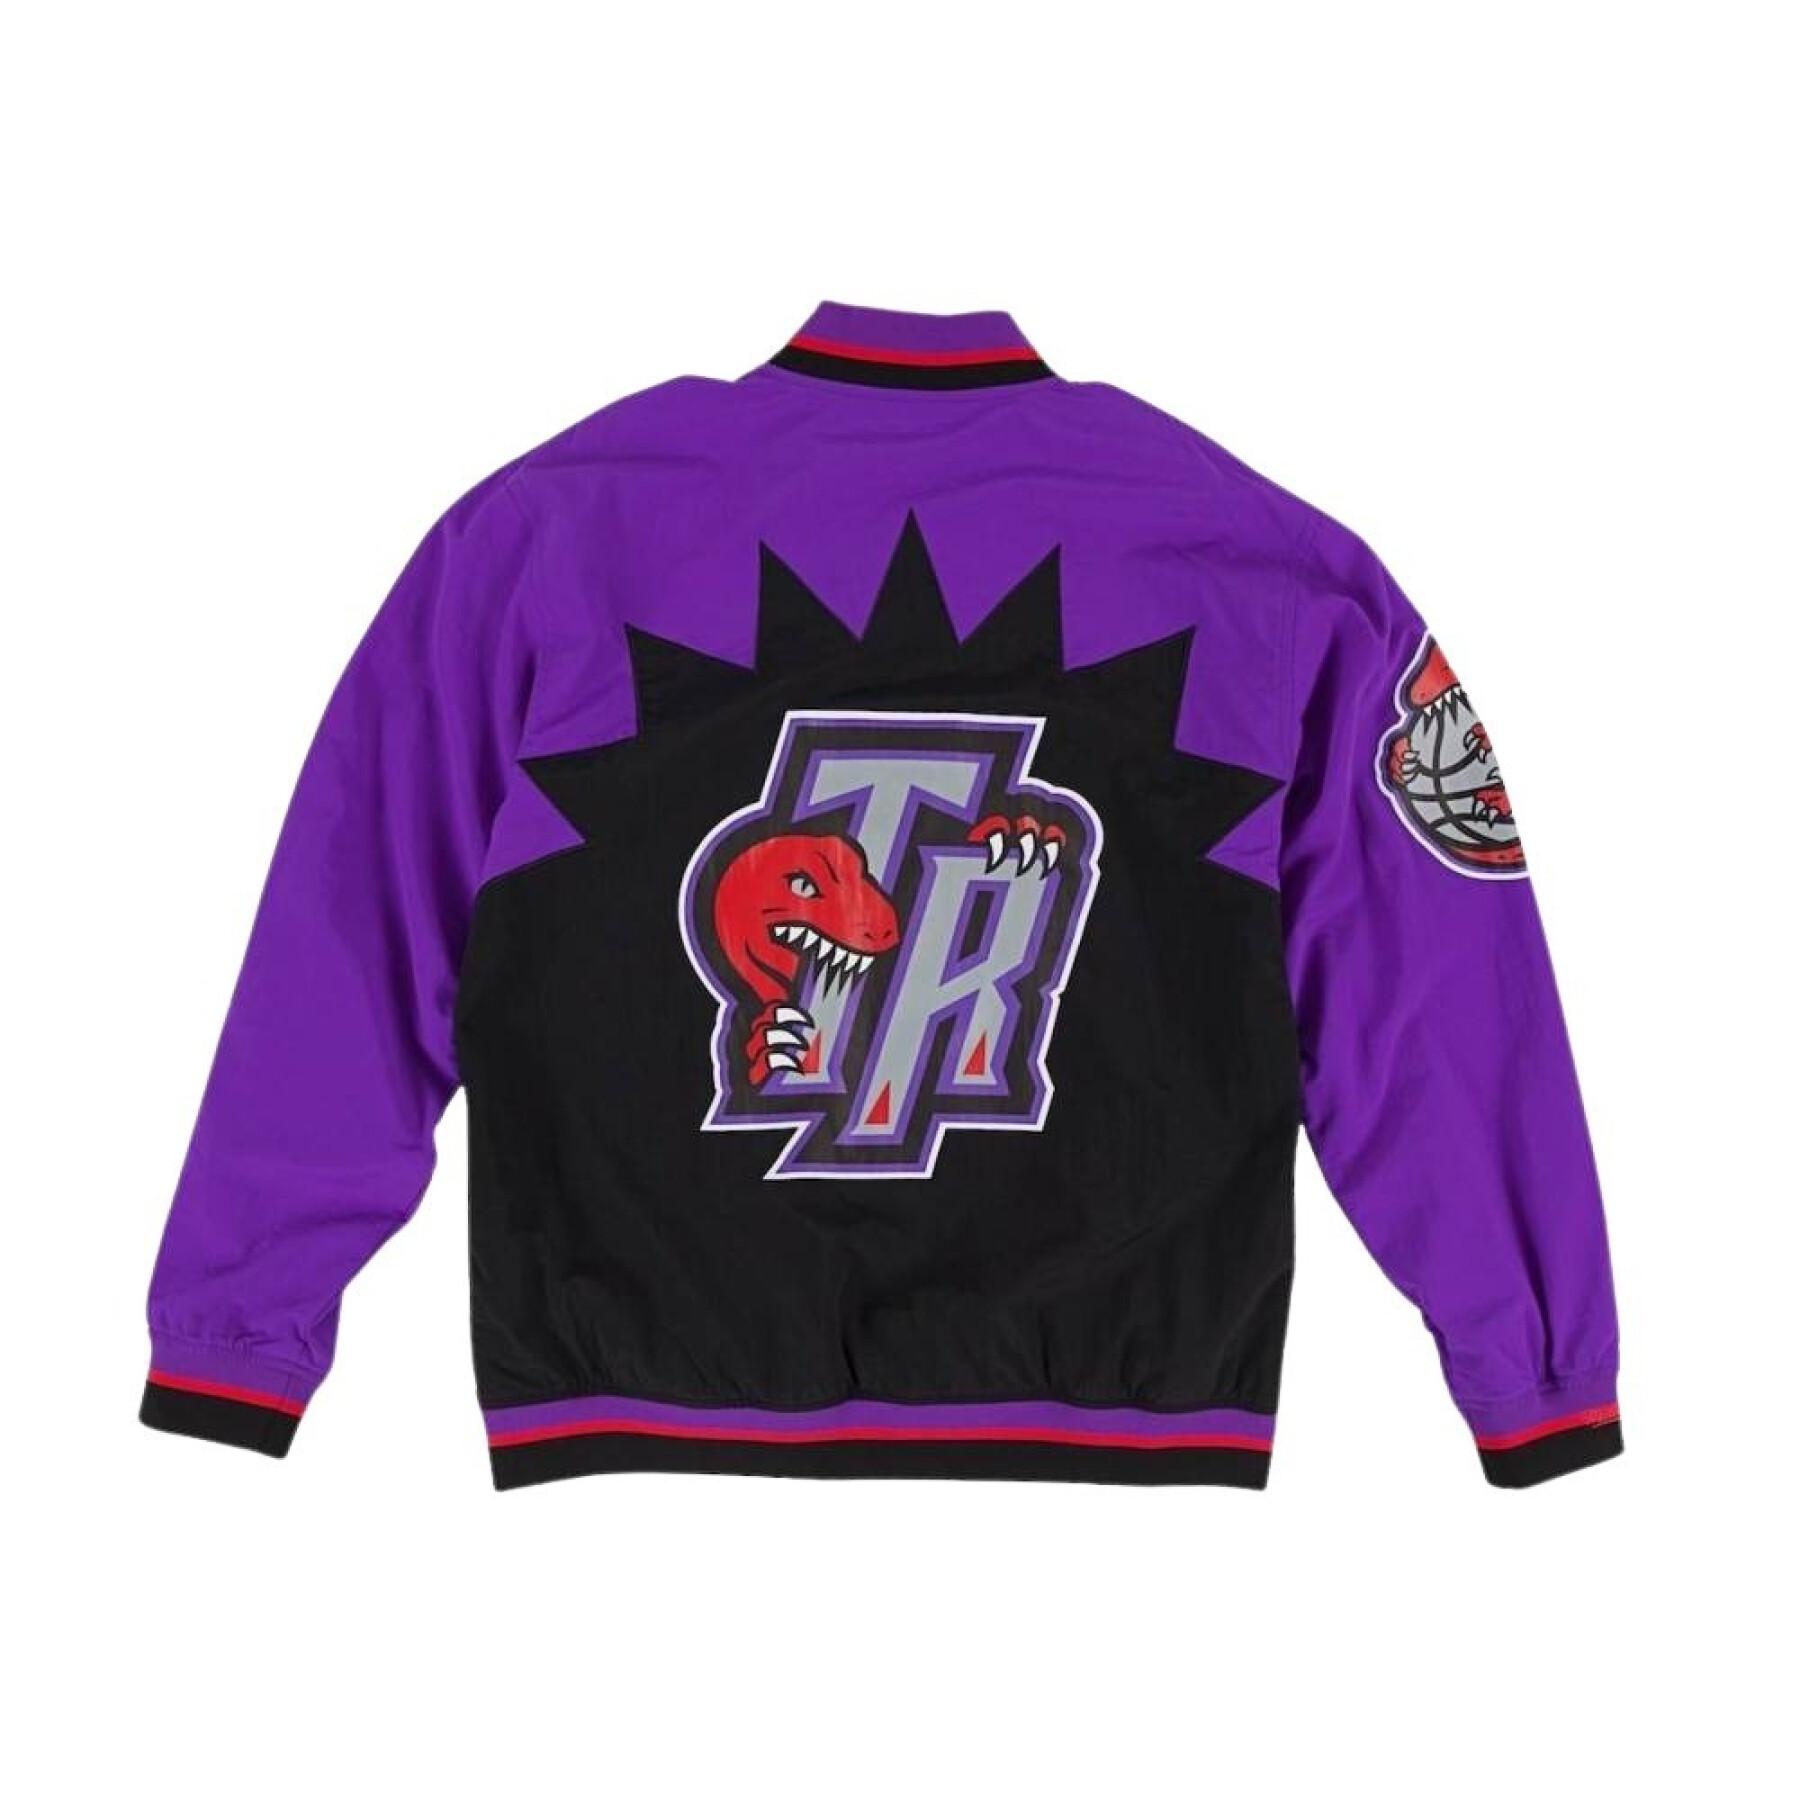 Jacket Toronto Raptors authentic 1995/96